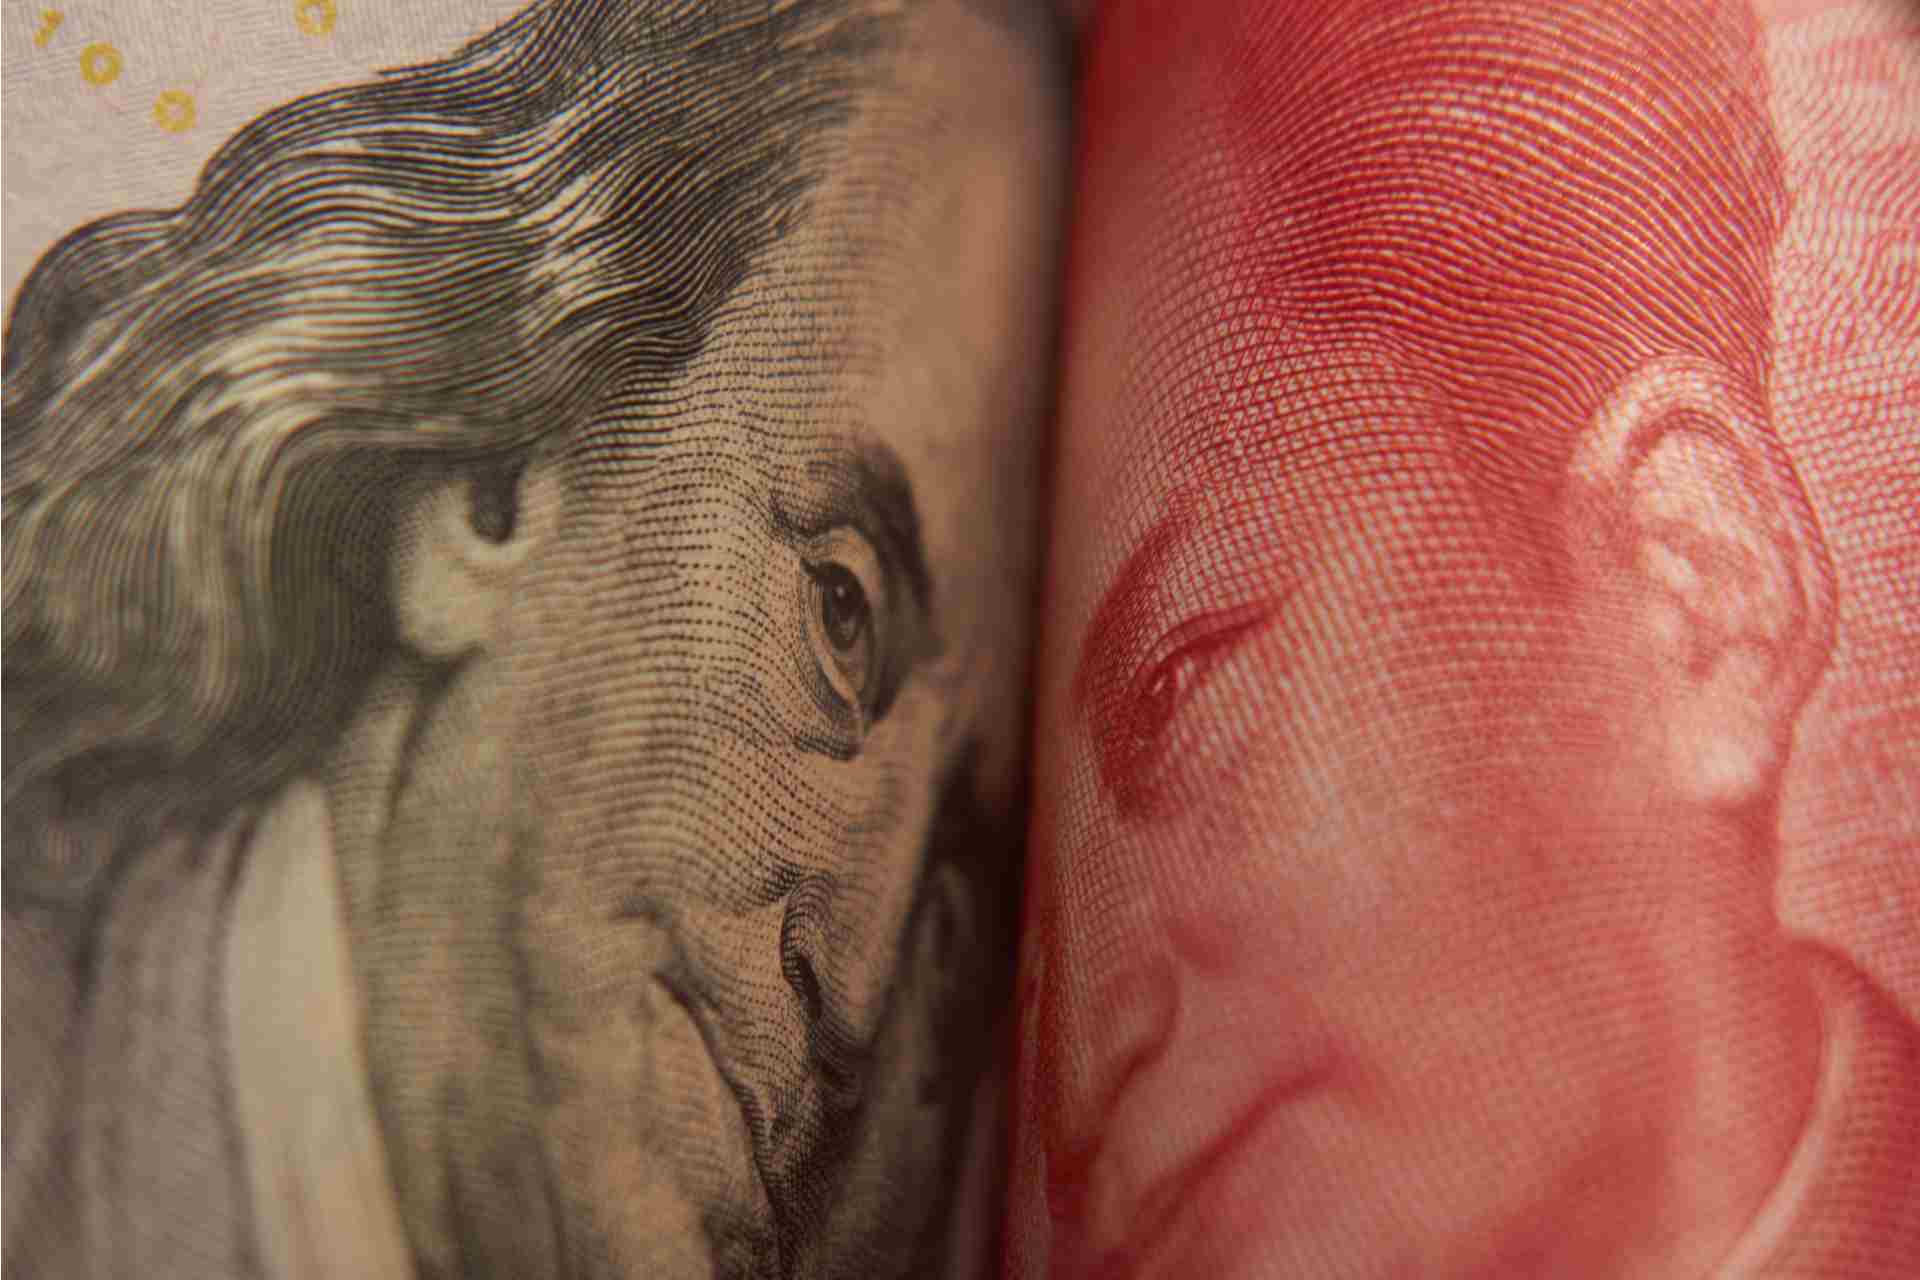 Yuan in Focus awaiting US Rebuttal